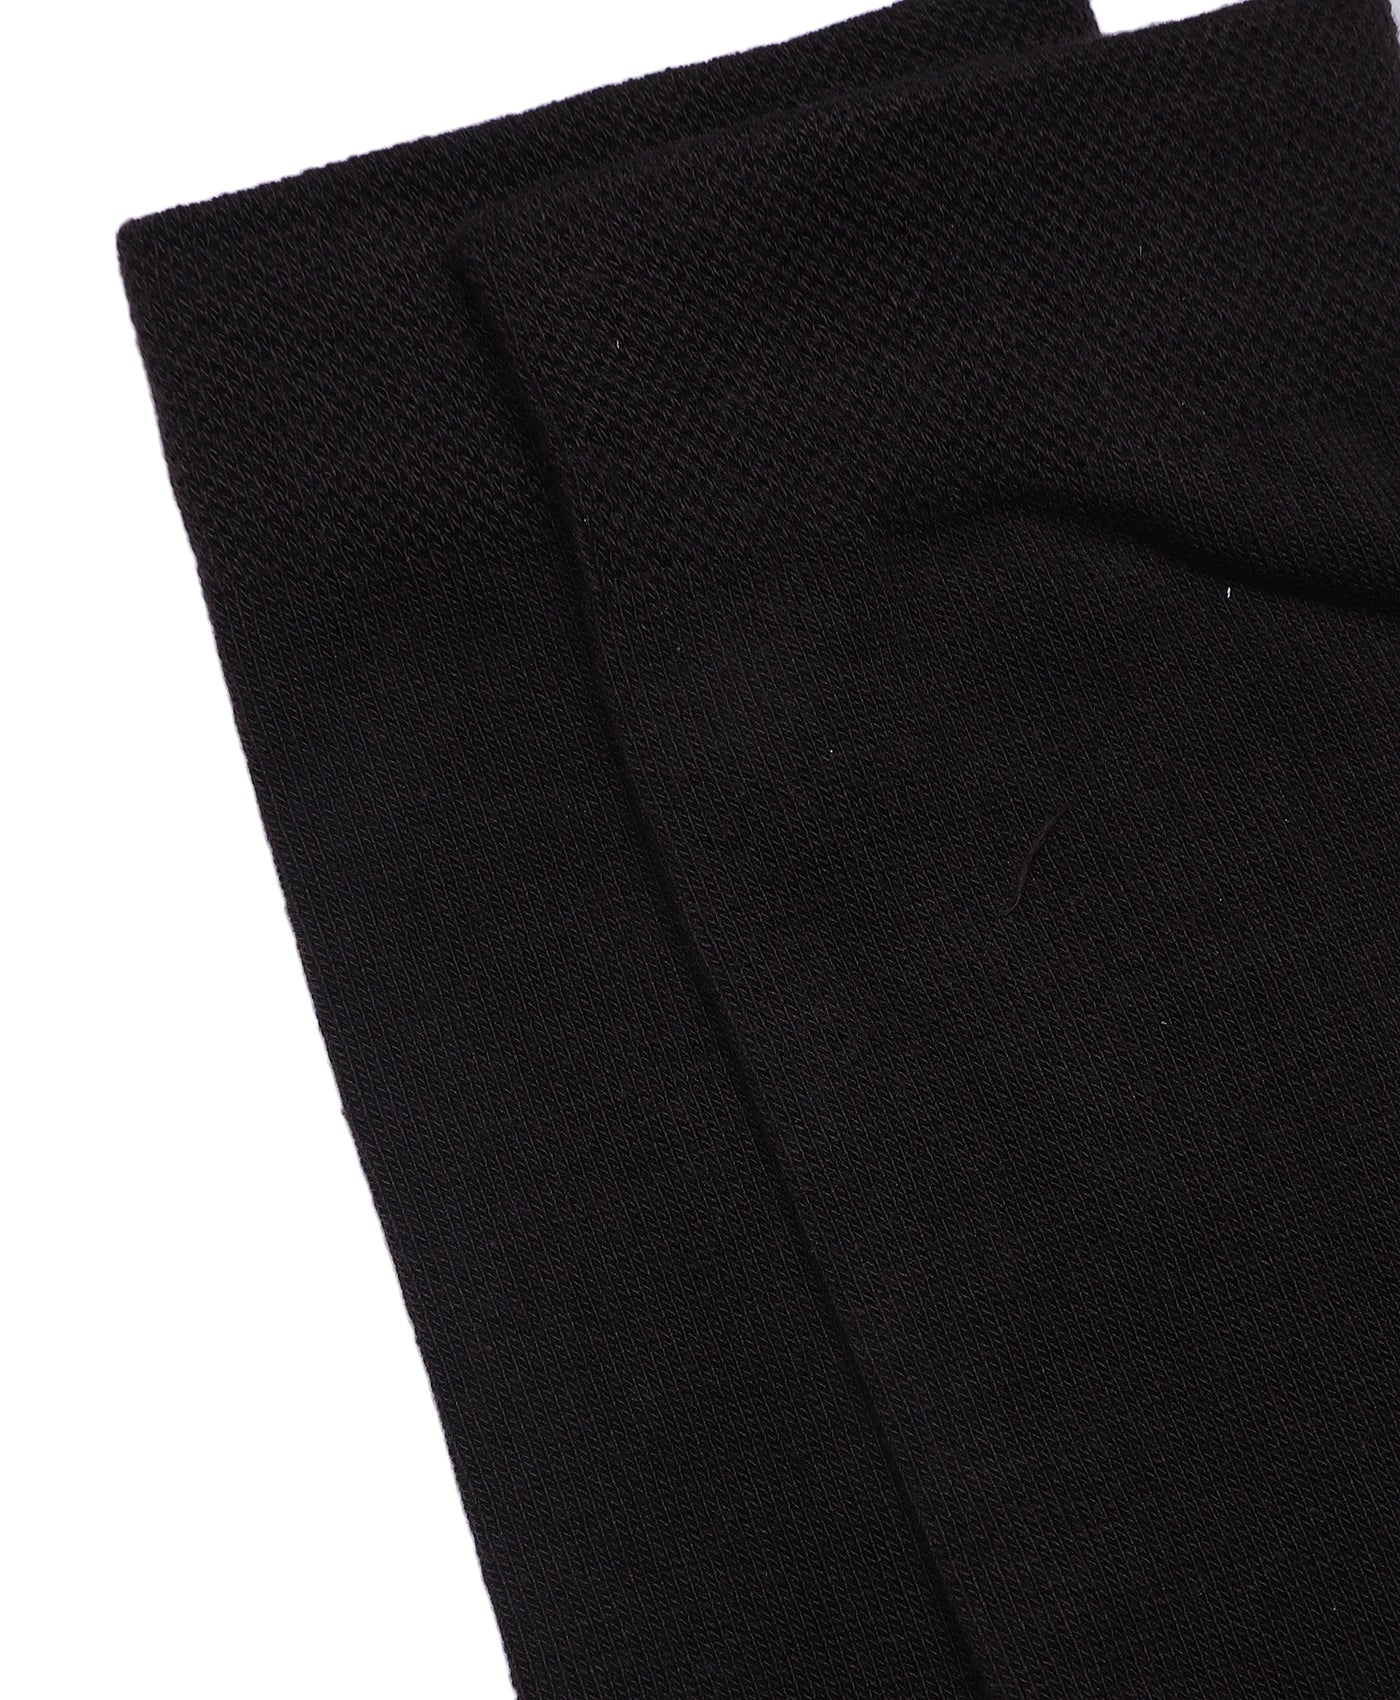 Cotton Black Solid Calf Length Formal Socks